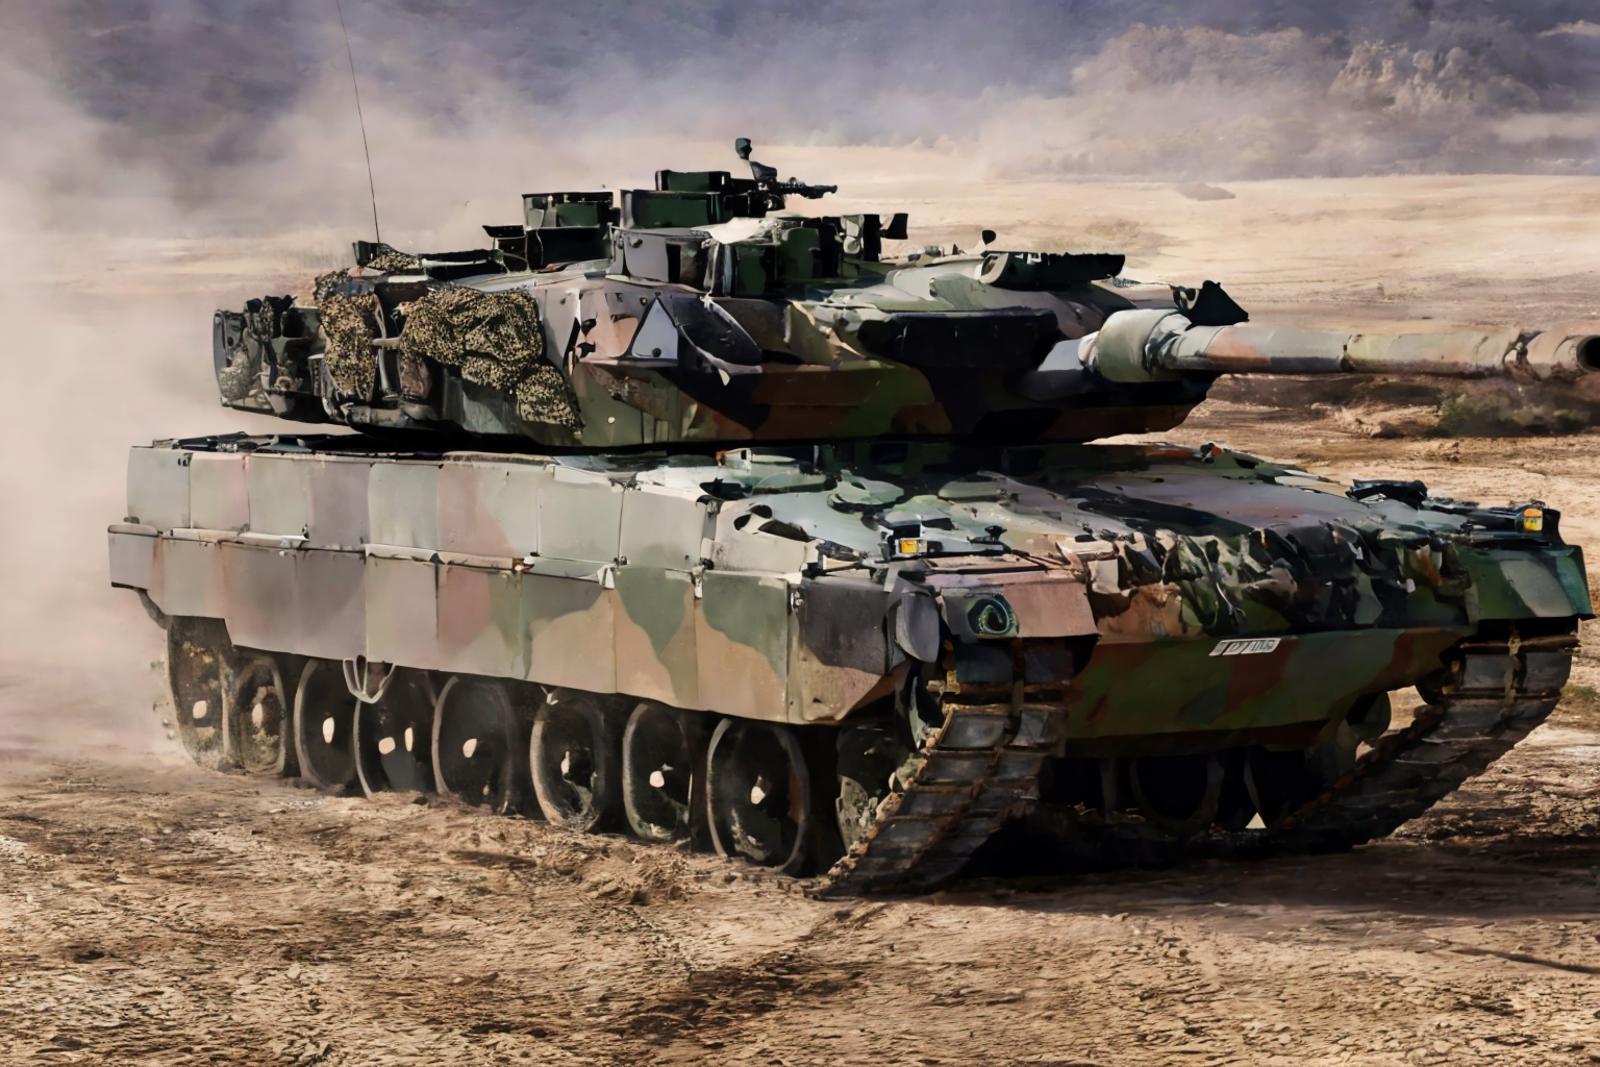 Leopard 2 ( Main battle tank ) image by richyrich515